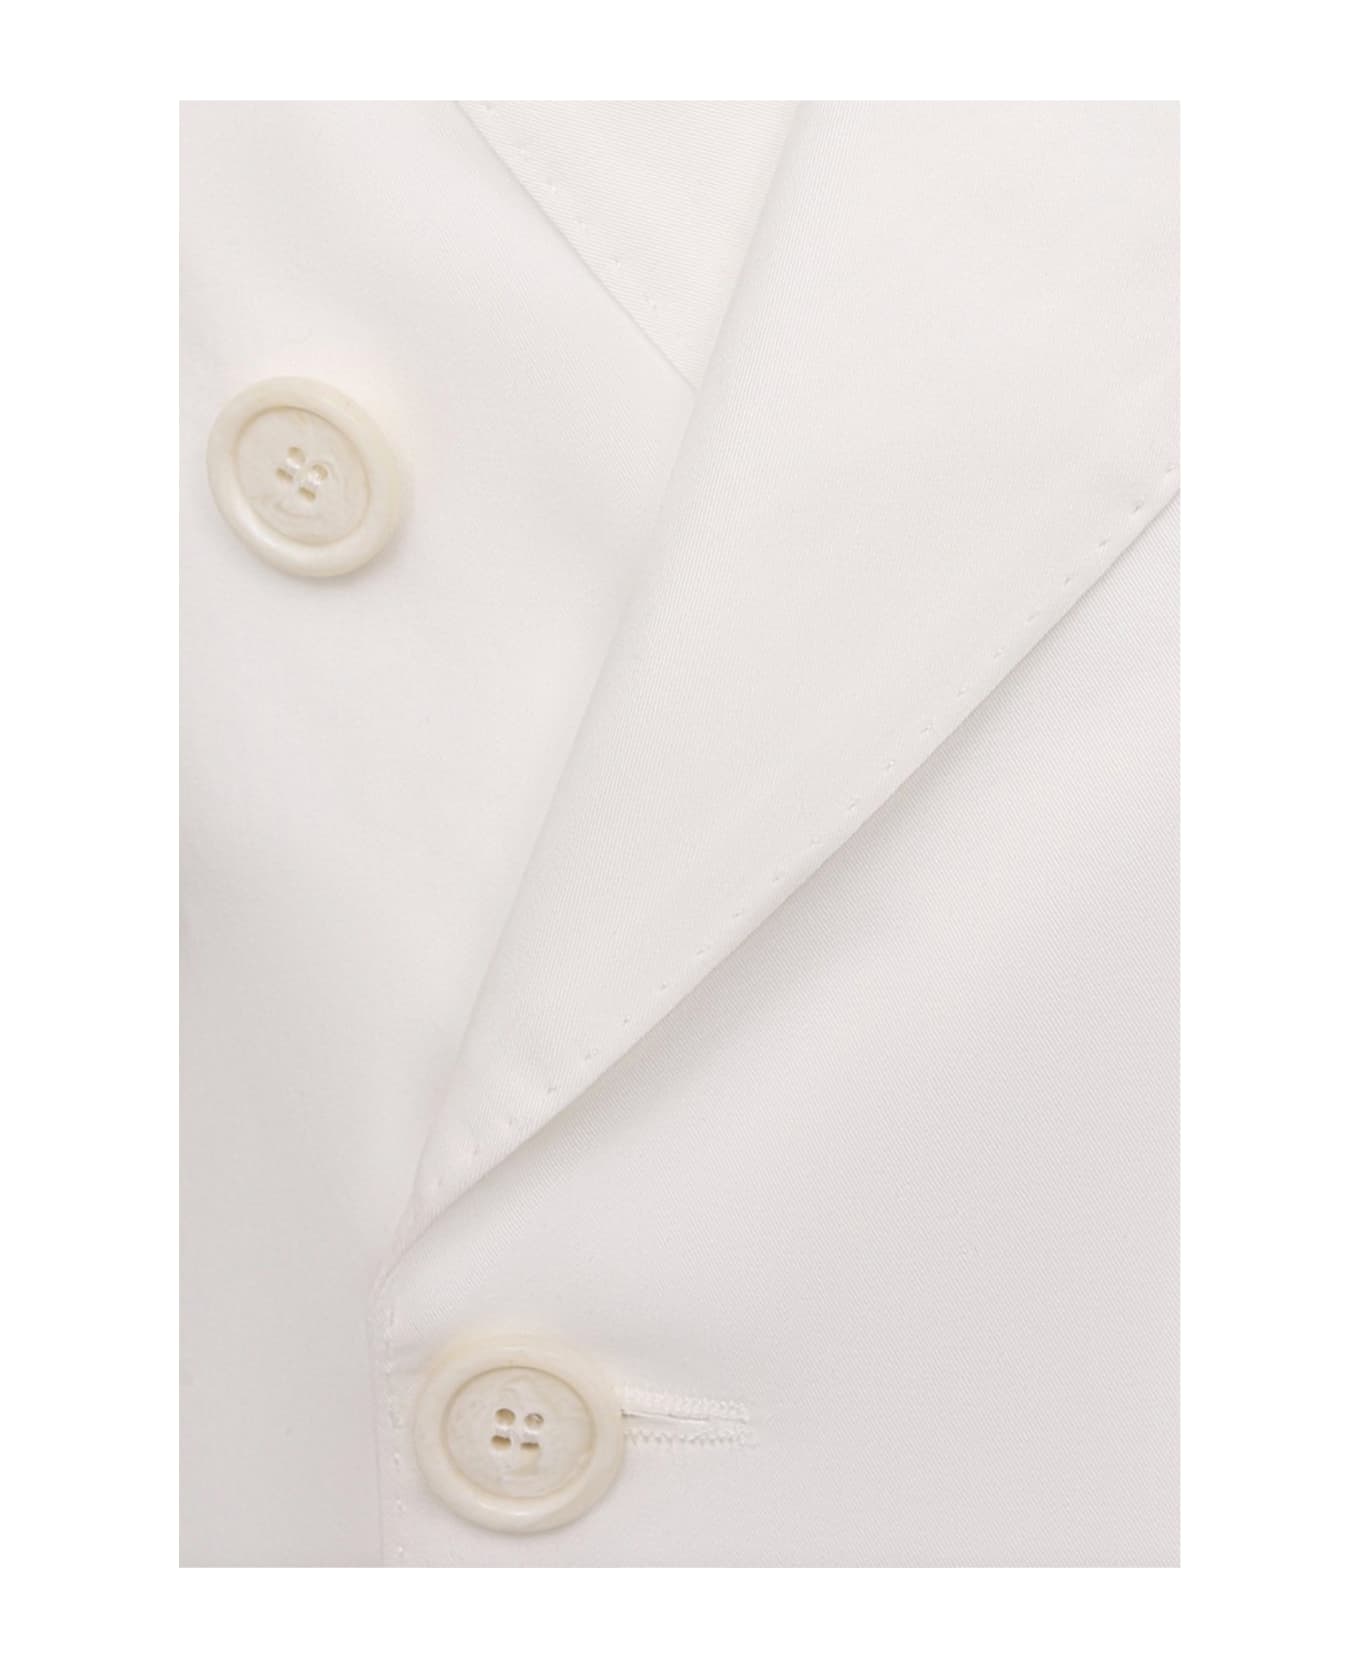 Maison Margiela Cotton Blazer - White コート